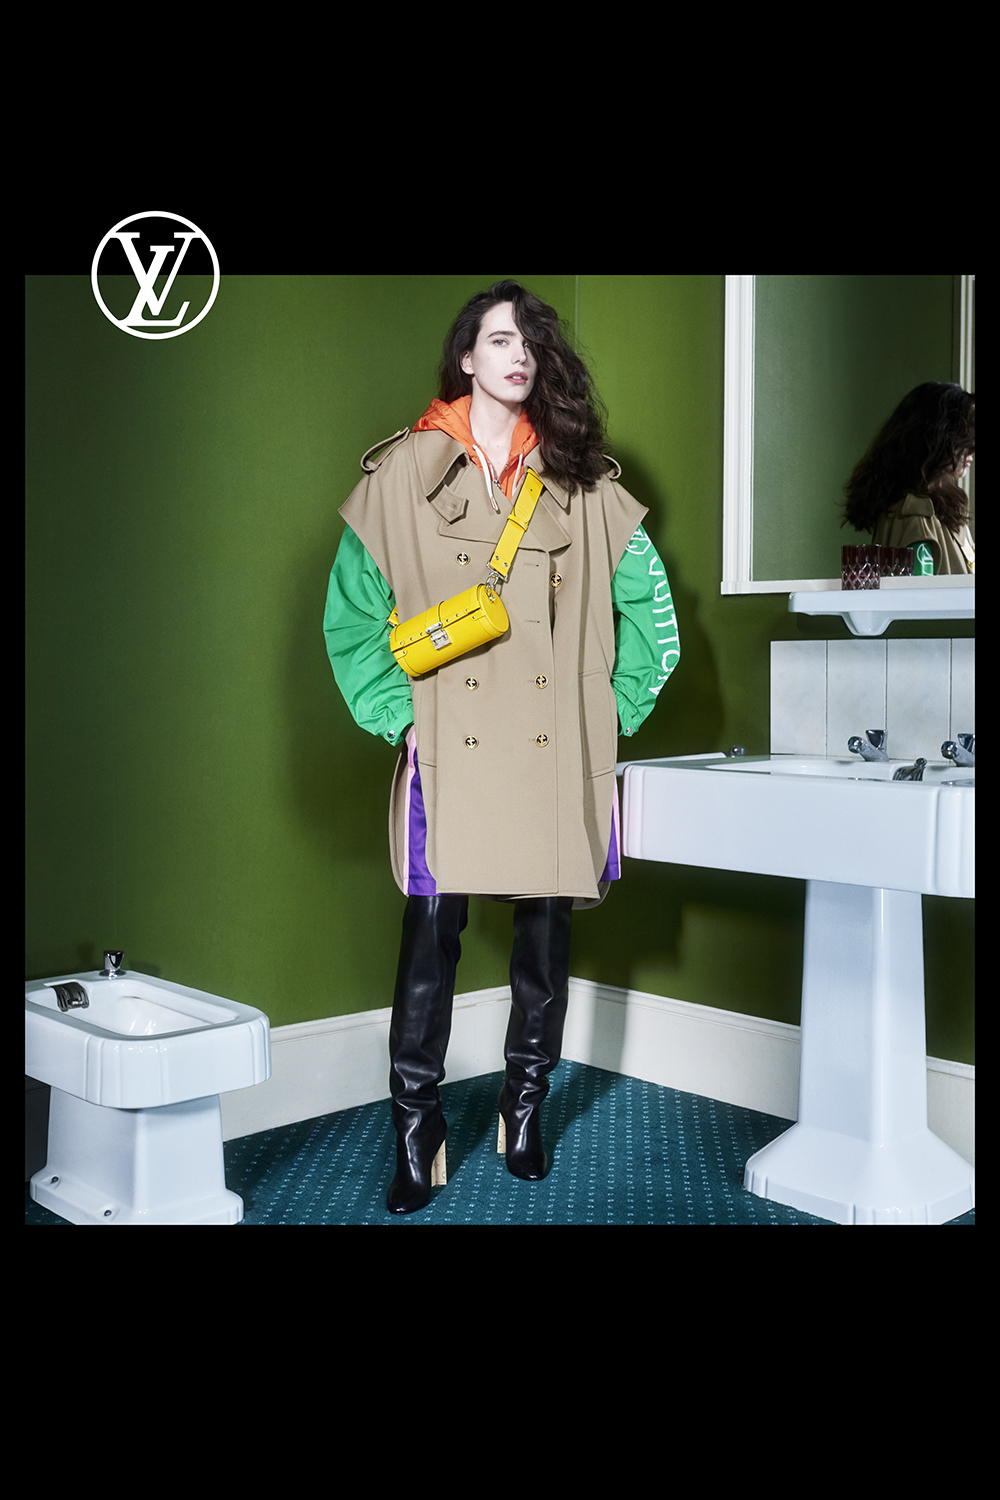 Louis Vuitton Pre-Fall 2021 Campaign Stacy Martin